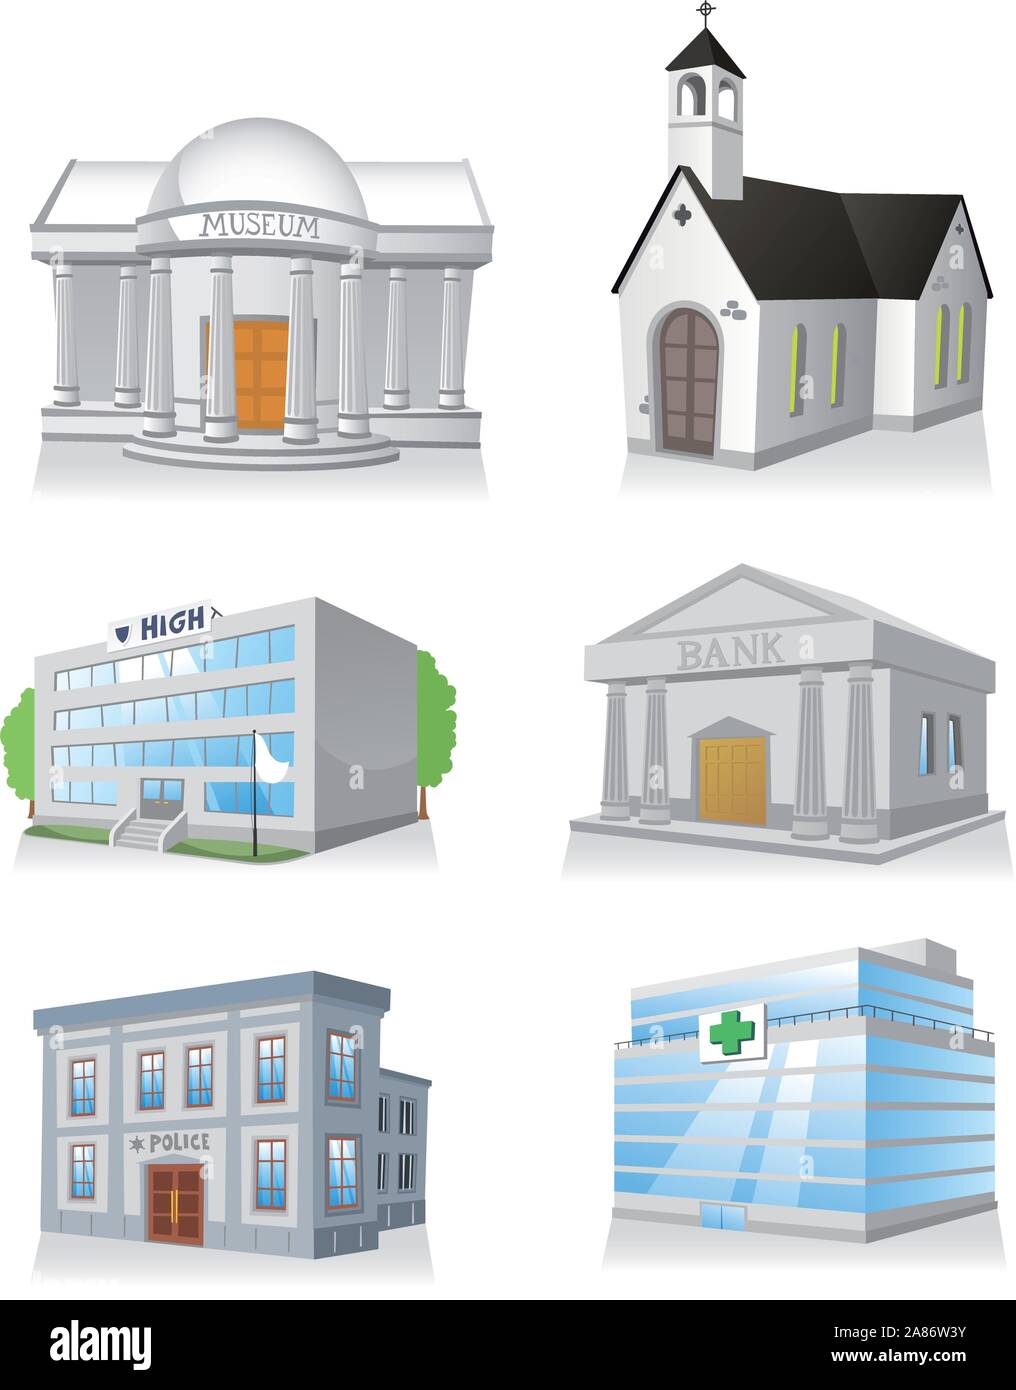 Public building cartoon set 3, church, hospital, police station, museum, high school, bank. Stock Vector